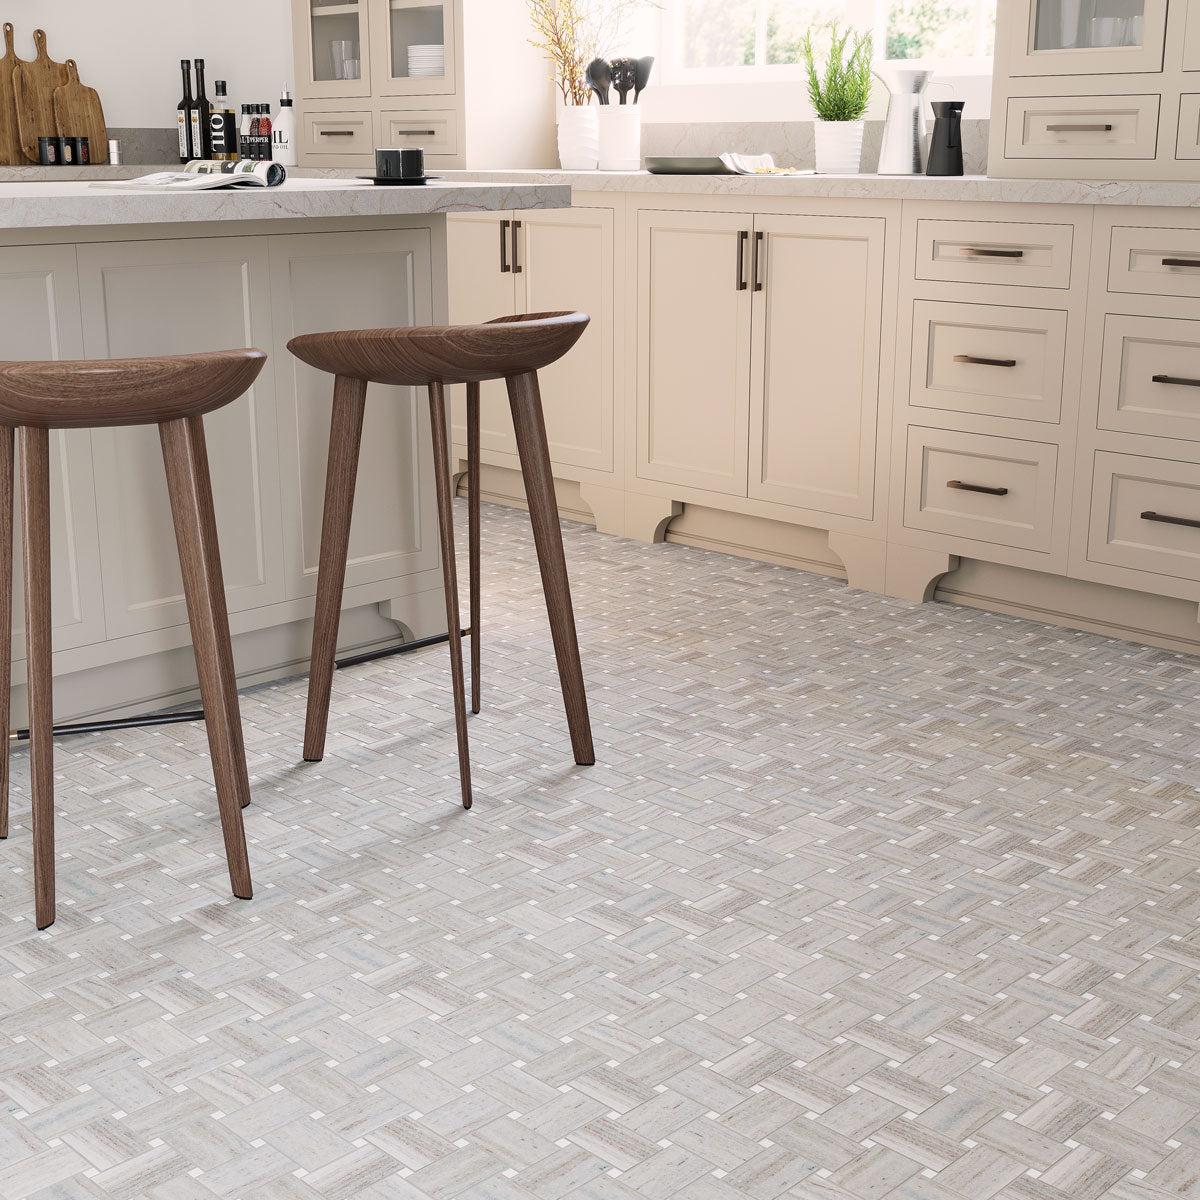 Neutral Beige and White Basket Weave Patterned Kitchen Floor Tiles